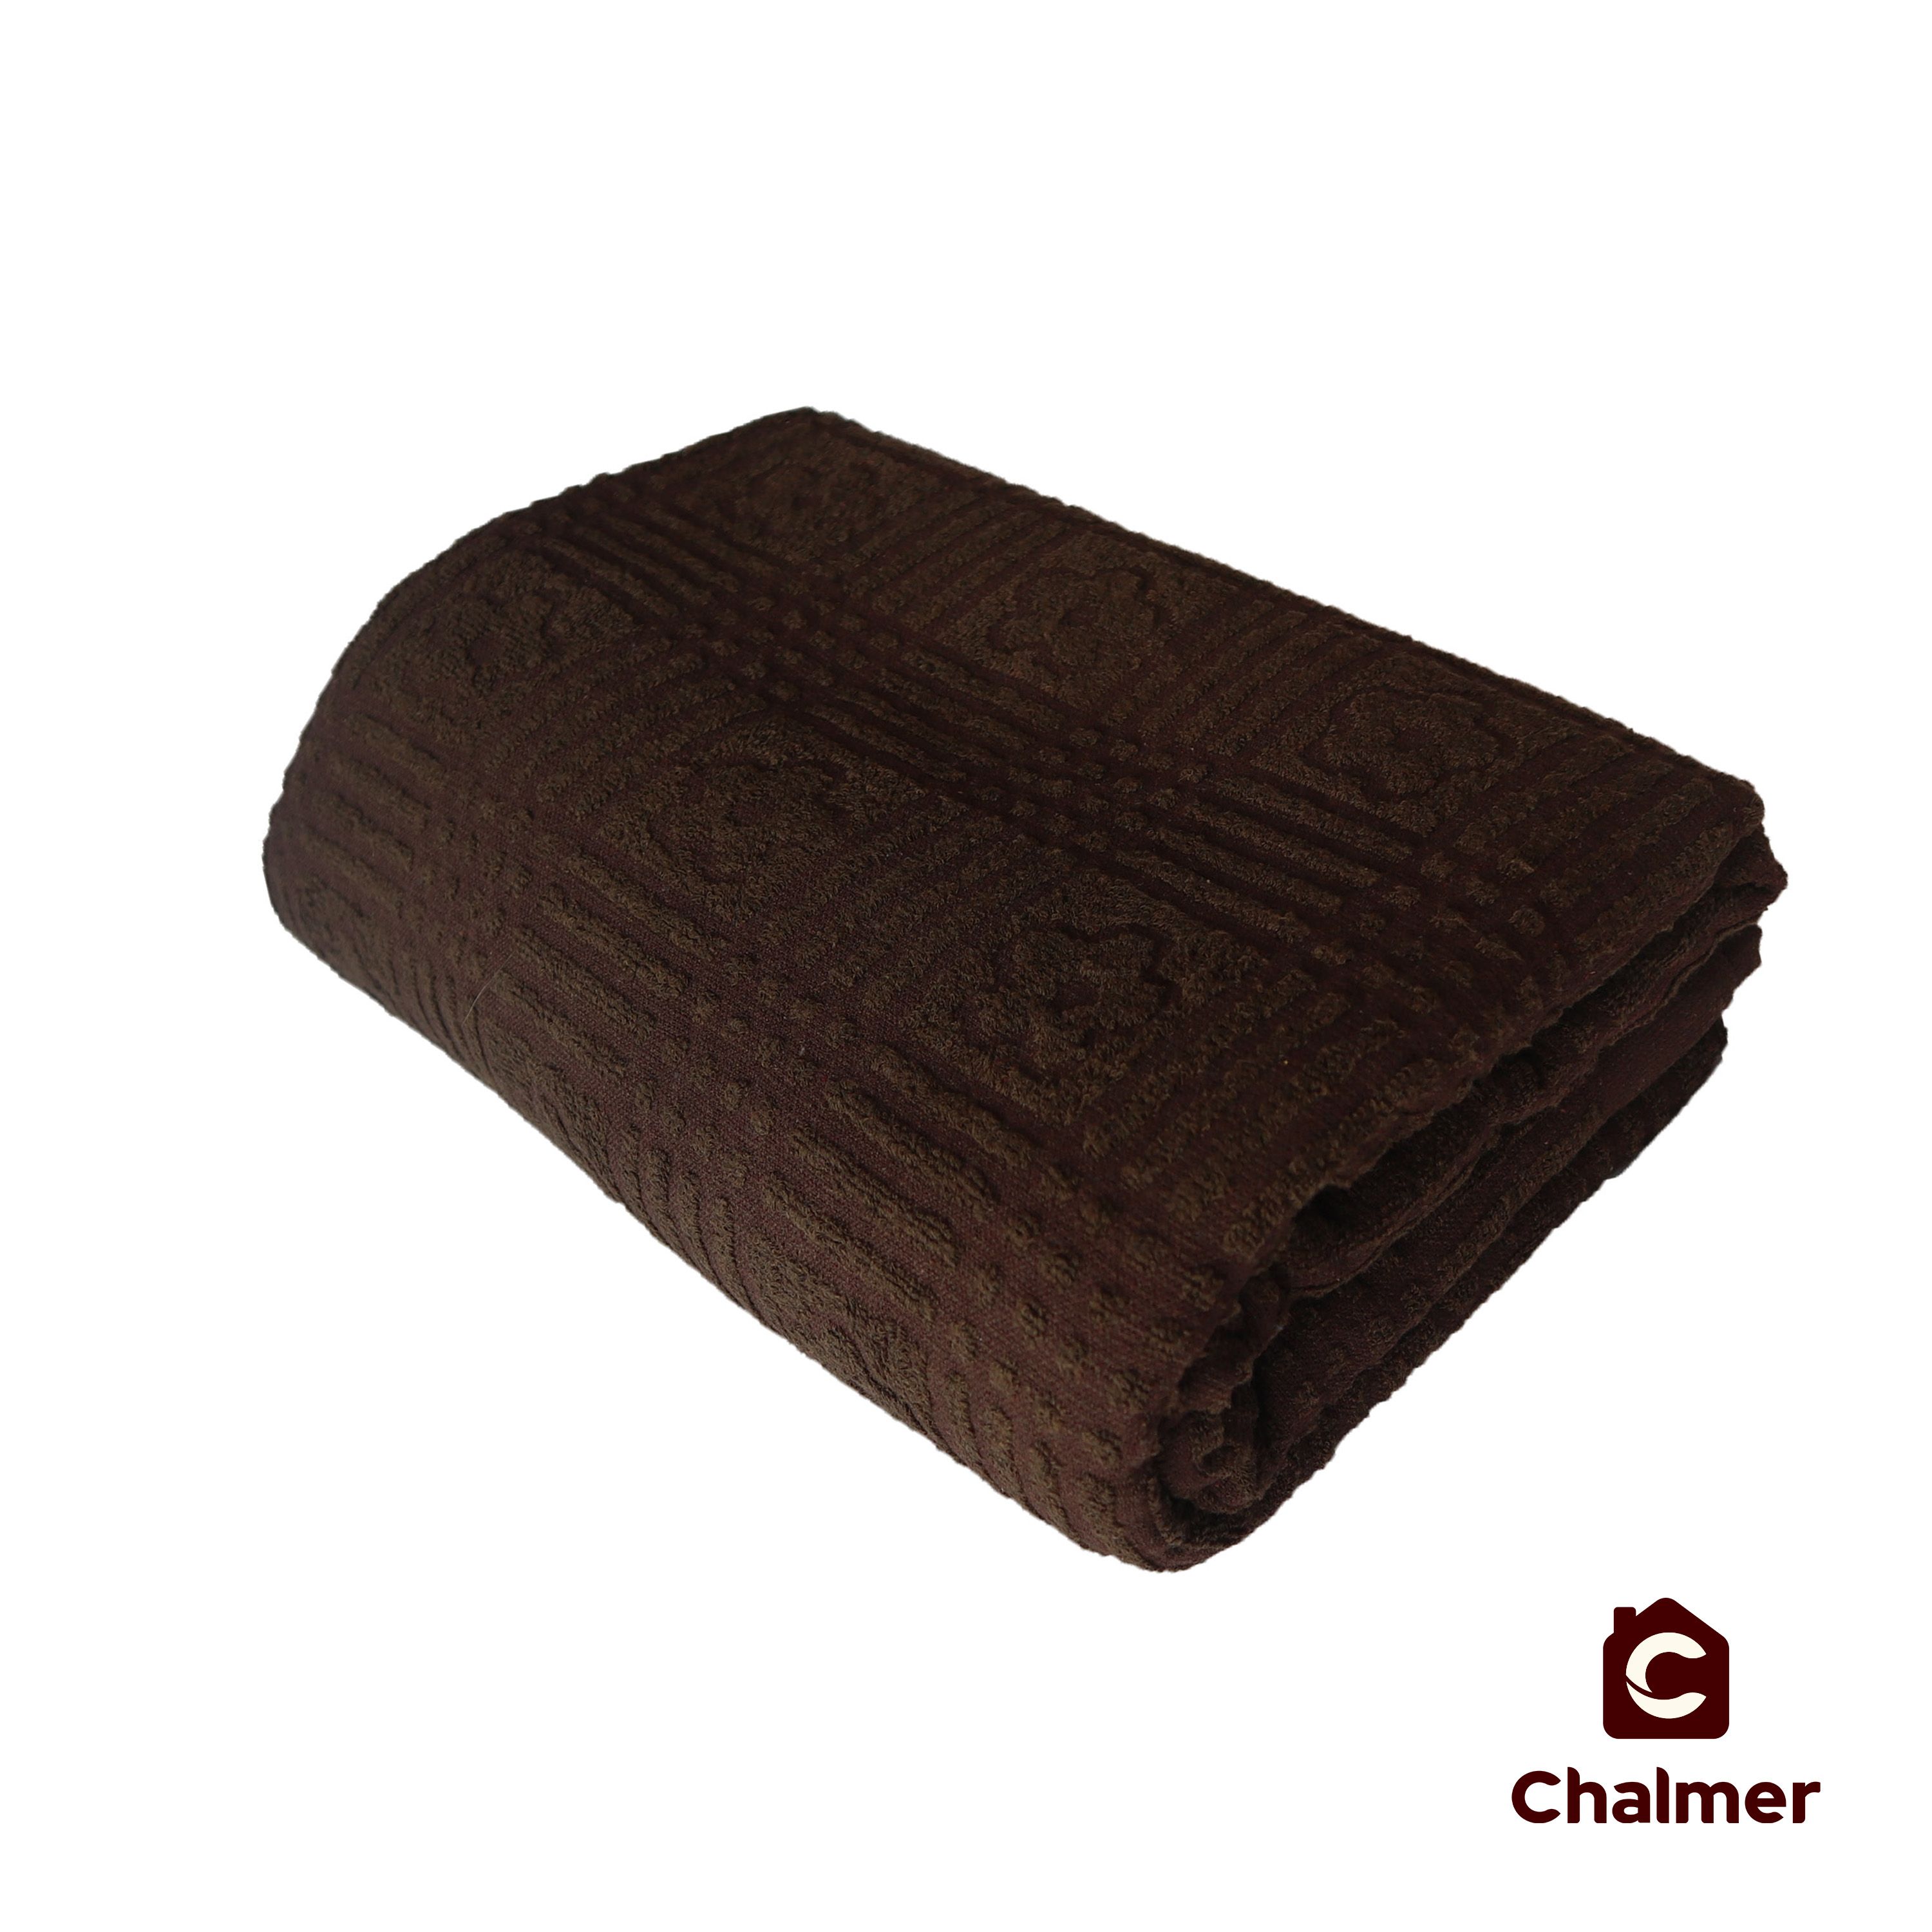 Selimut Katun Chalmer Ukuran 145x200 cm Terry Cloth Towel Blanket - Dark Brown - 1